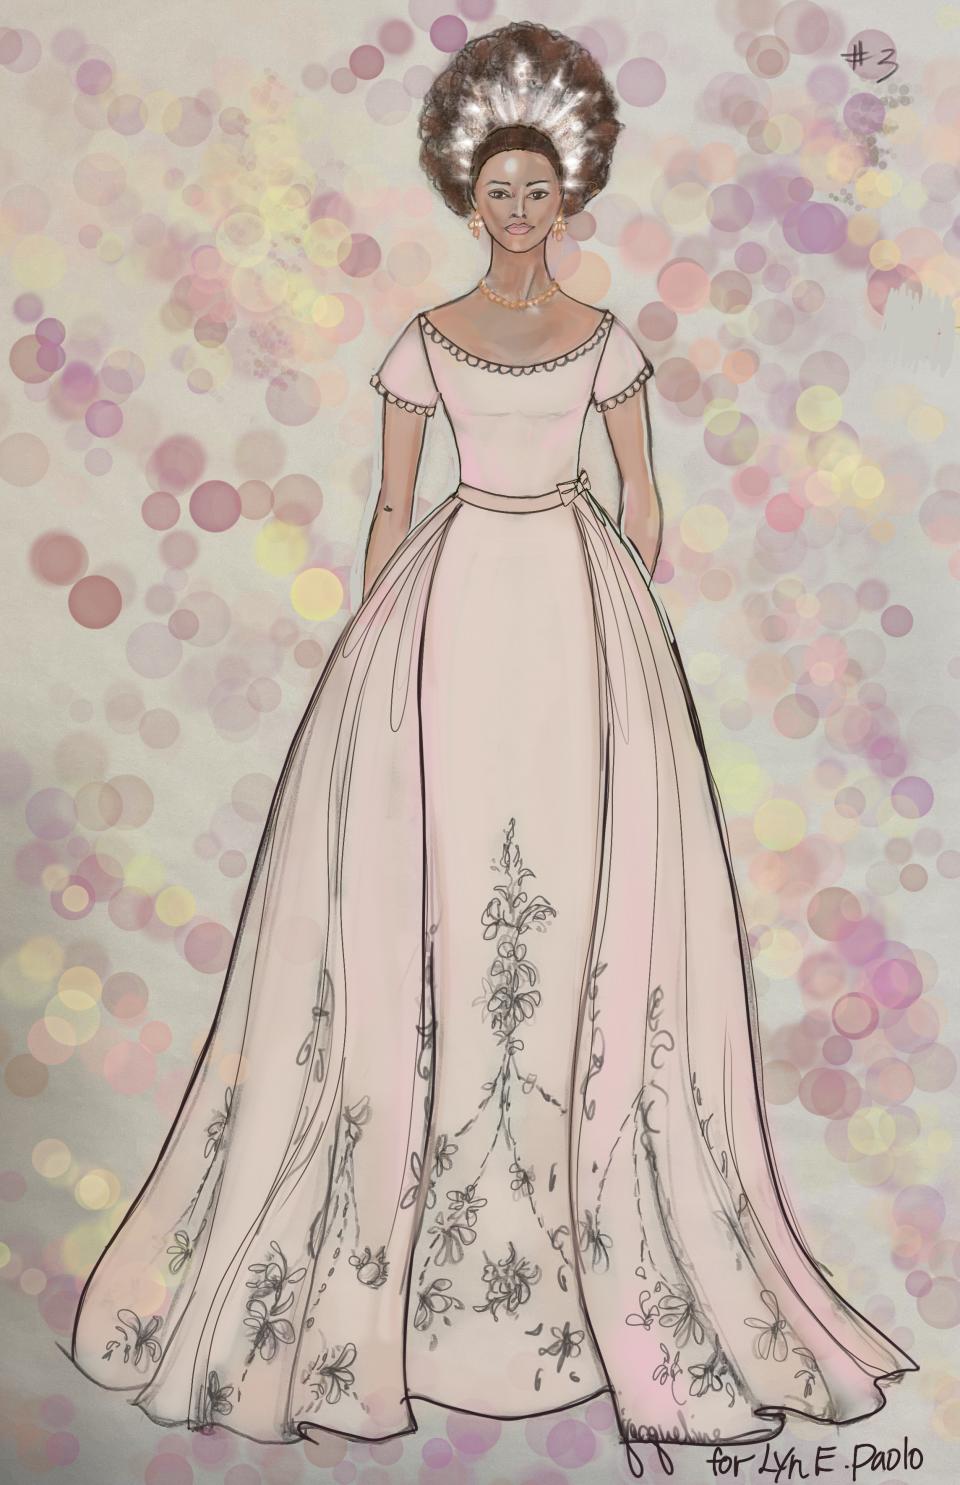 Bridgerton - Collection - Bridal Gown - Costume Designer Lyn Elizabeth Paolo - Sketch